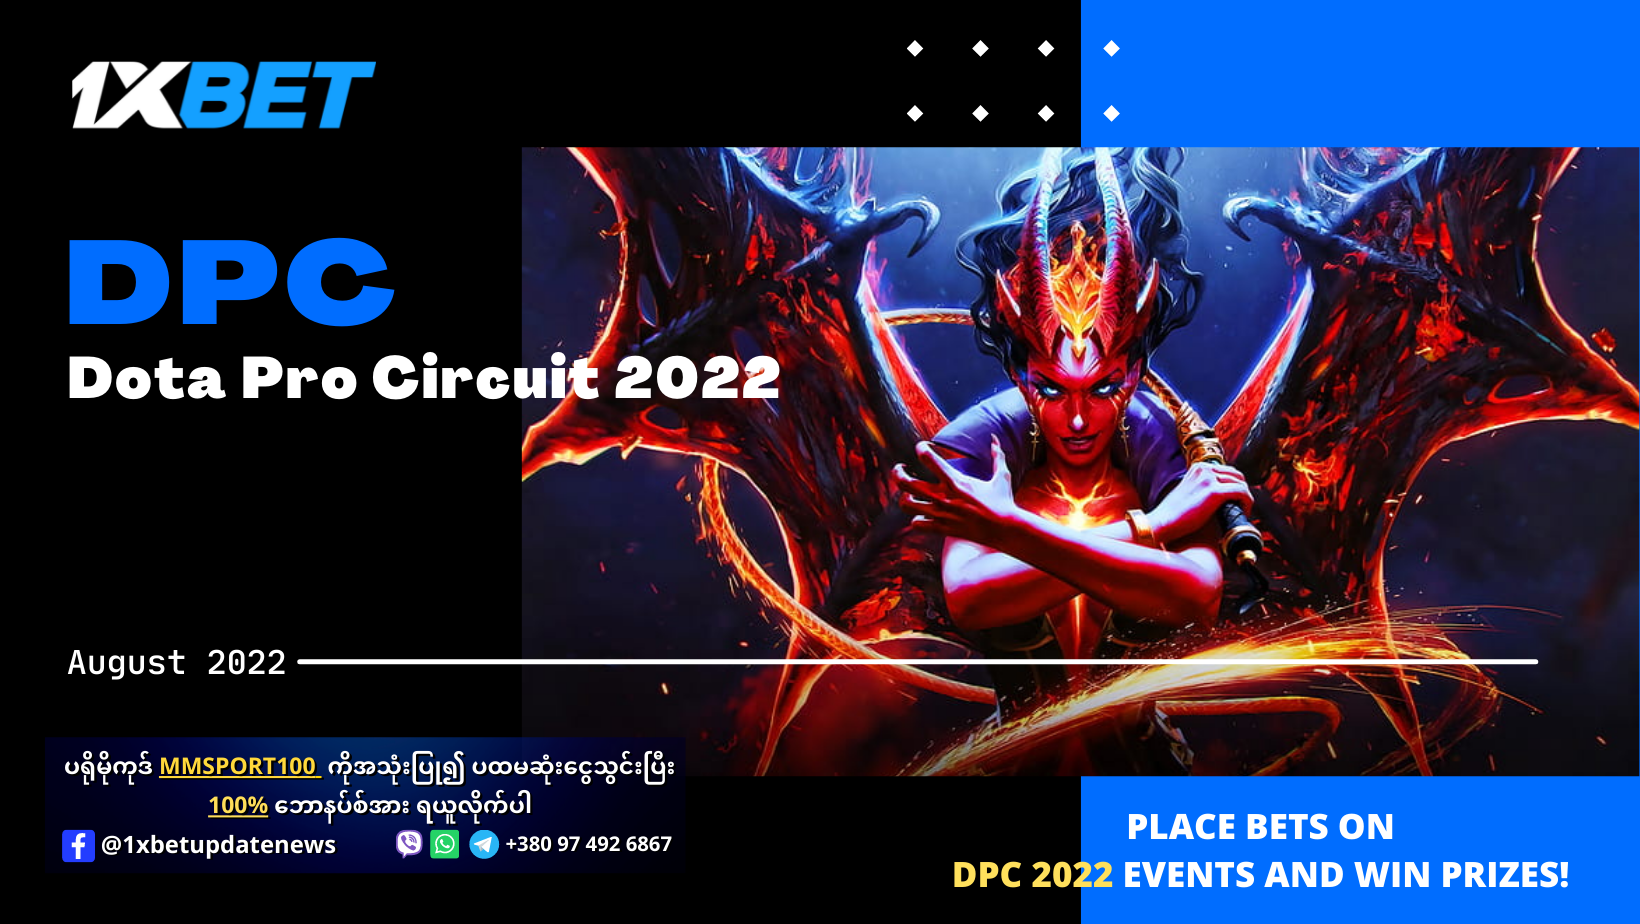 Dota Pro Circuit 2022 Promotion 1xBet